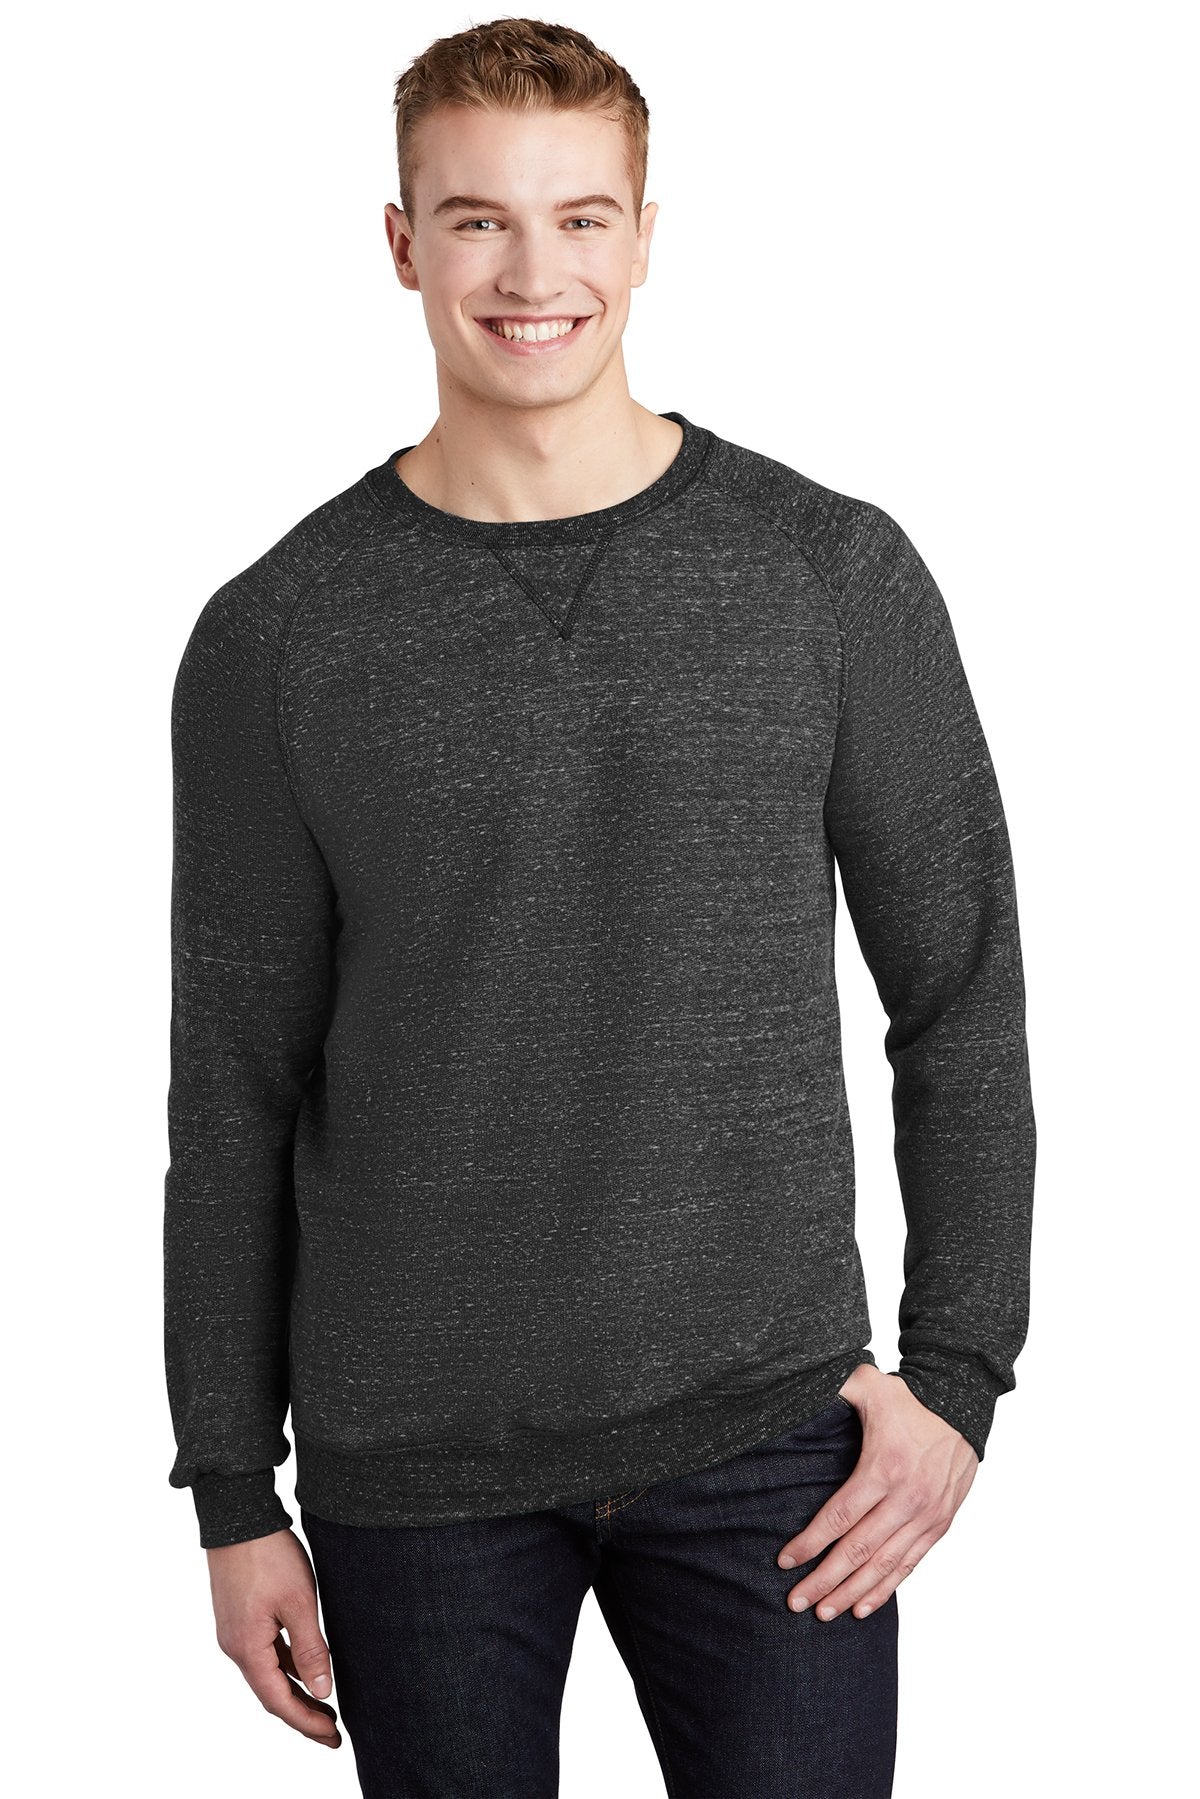 Jerzees Black Ink 91M sweatshirts with logos